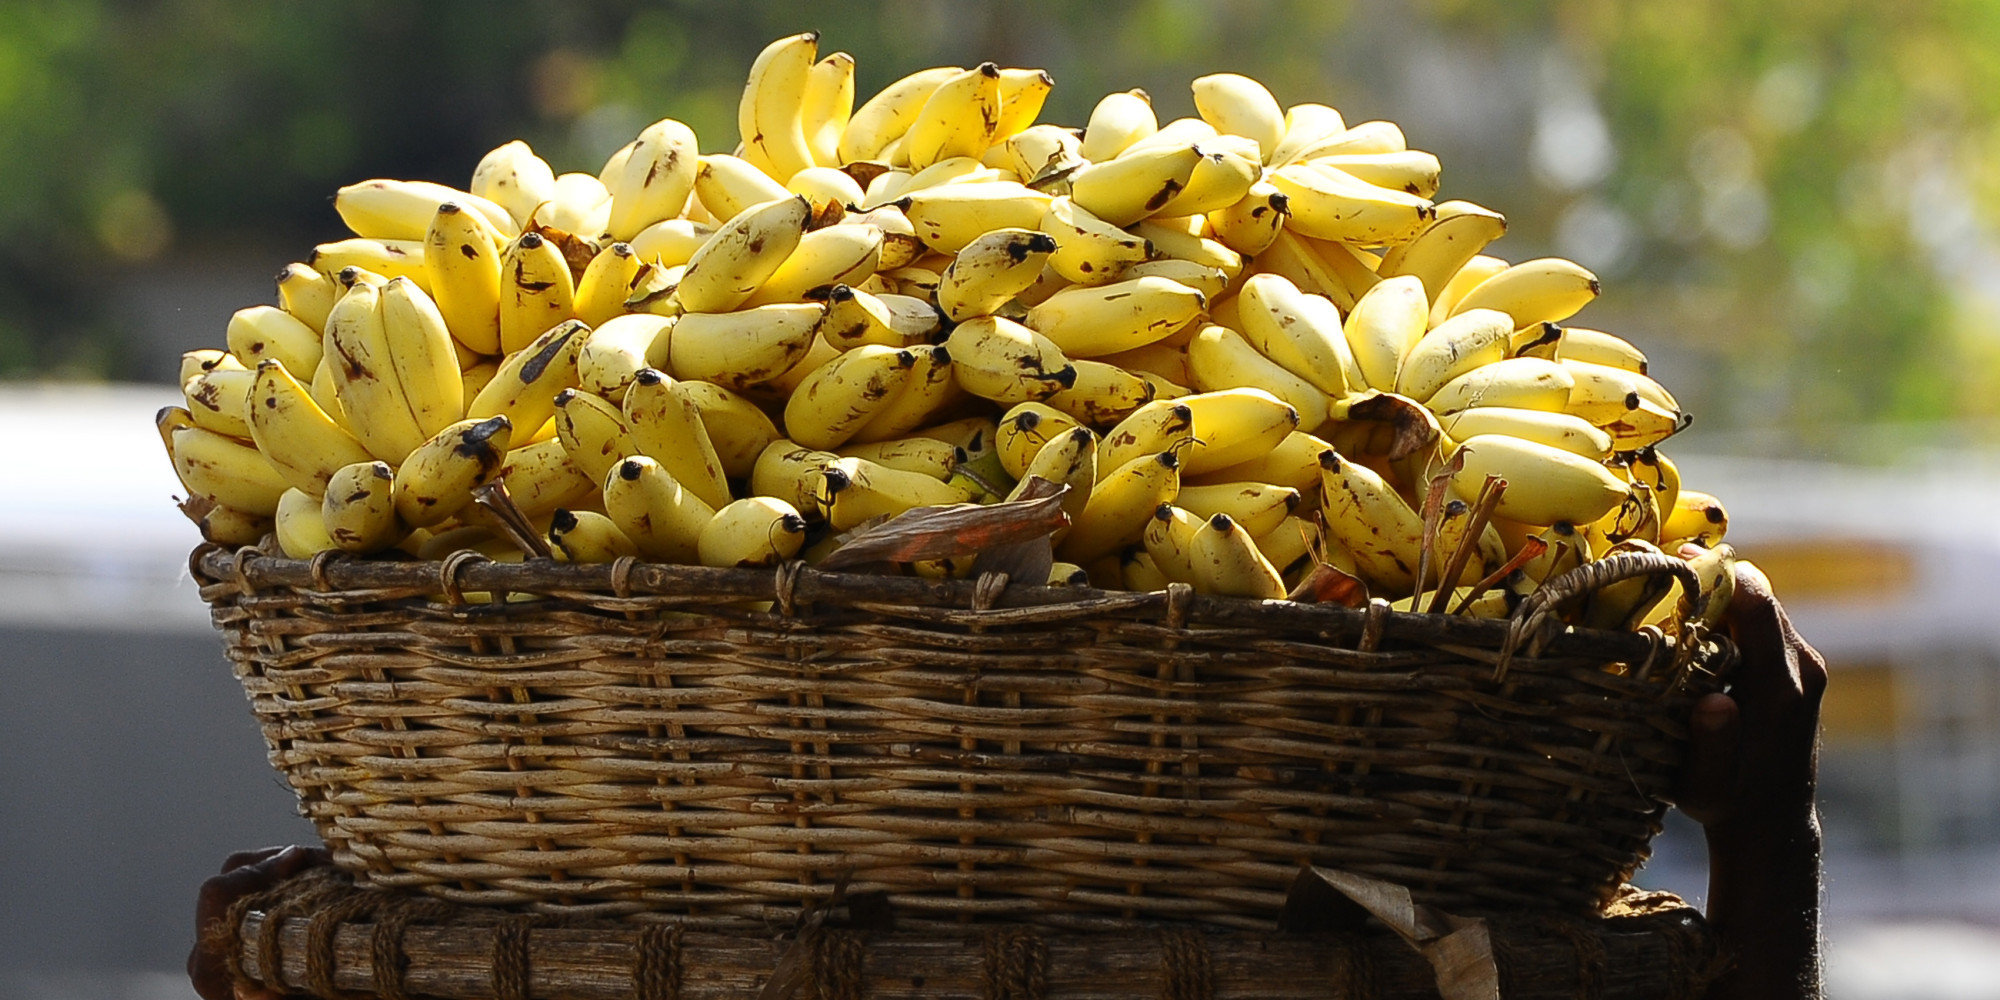 Banana - Golden Fruit - Nature's secret of perpetual youth ...